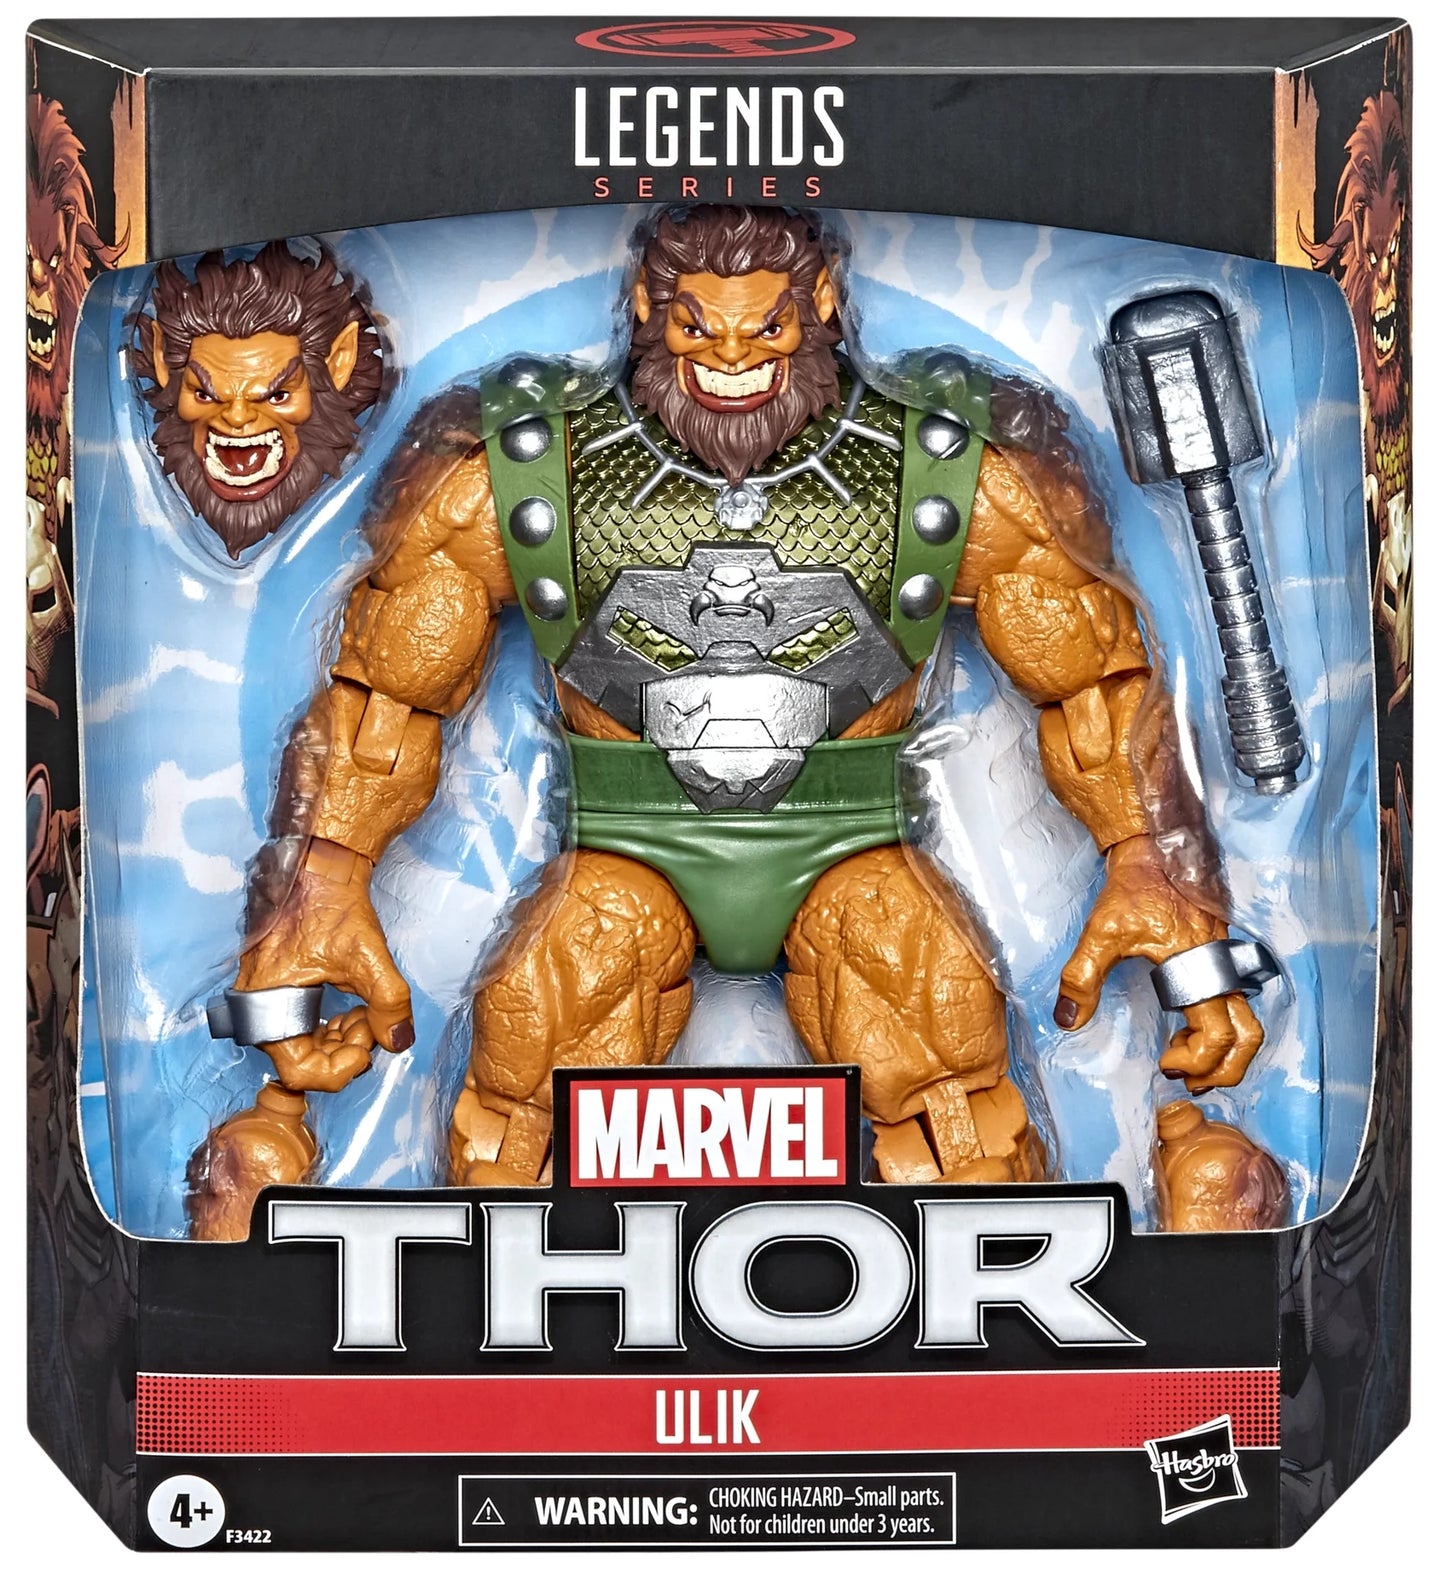 Marvel Legends Ulik the Troll King Action Figure Collectible, Walmart Exclusive